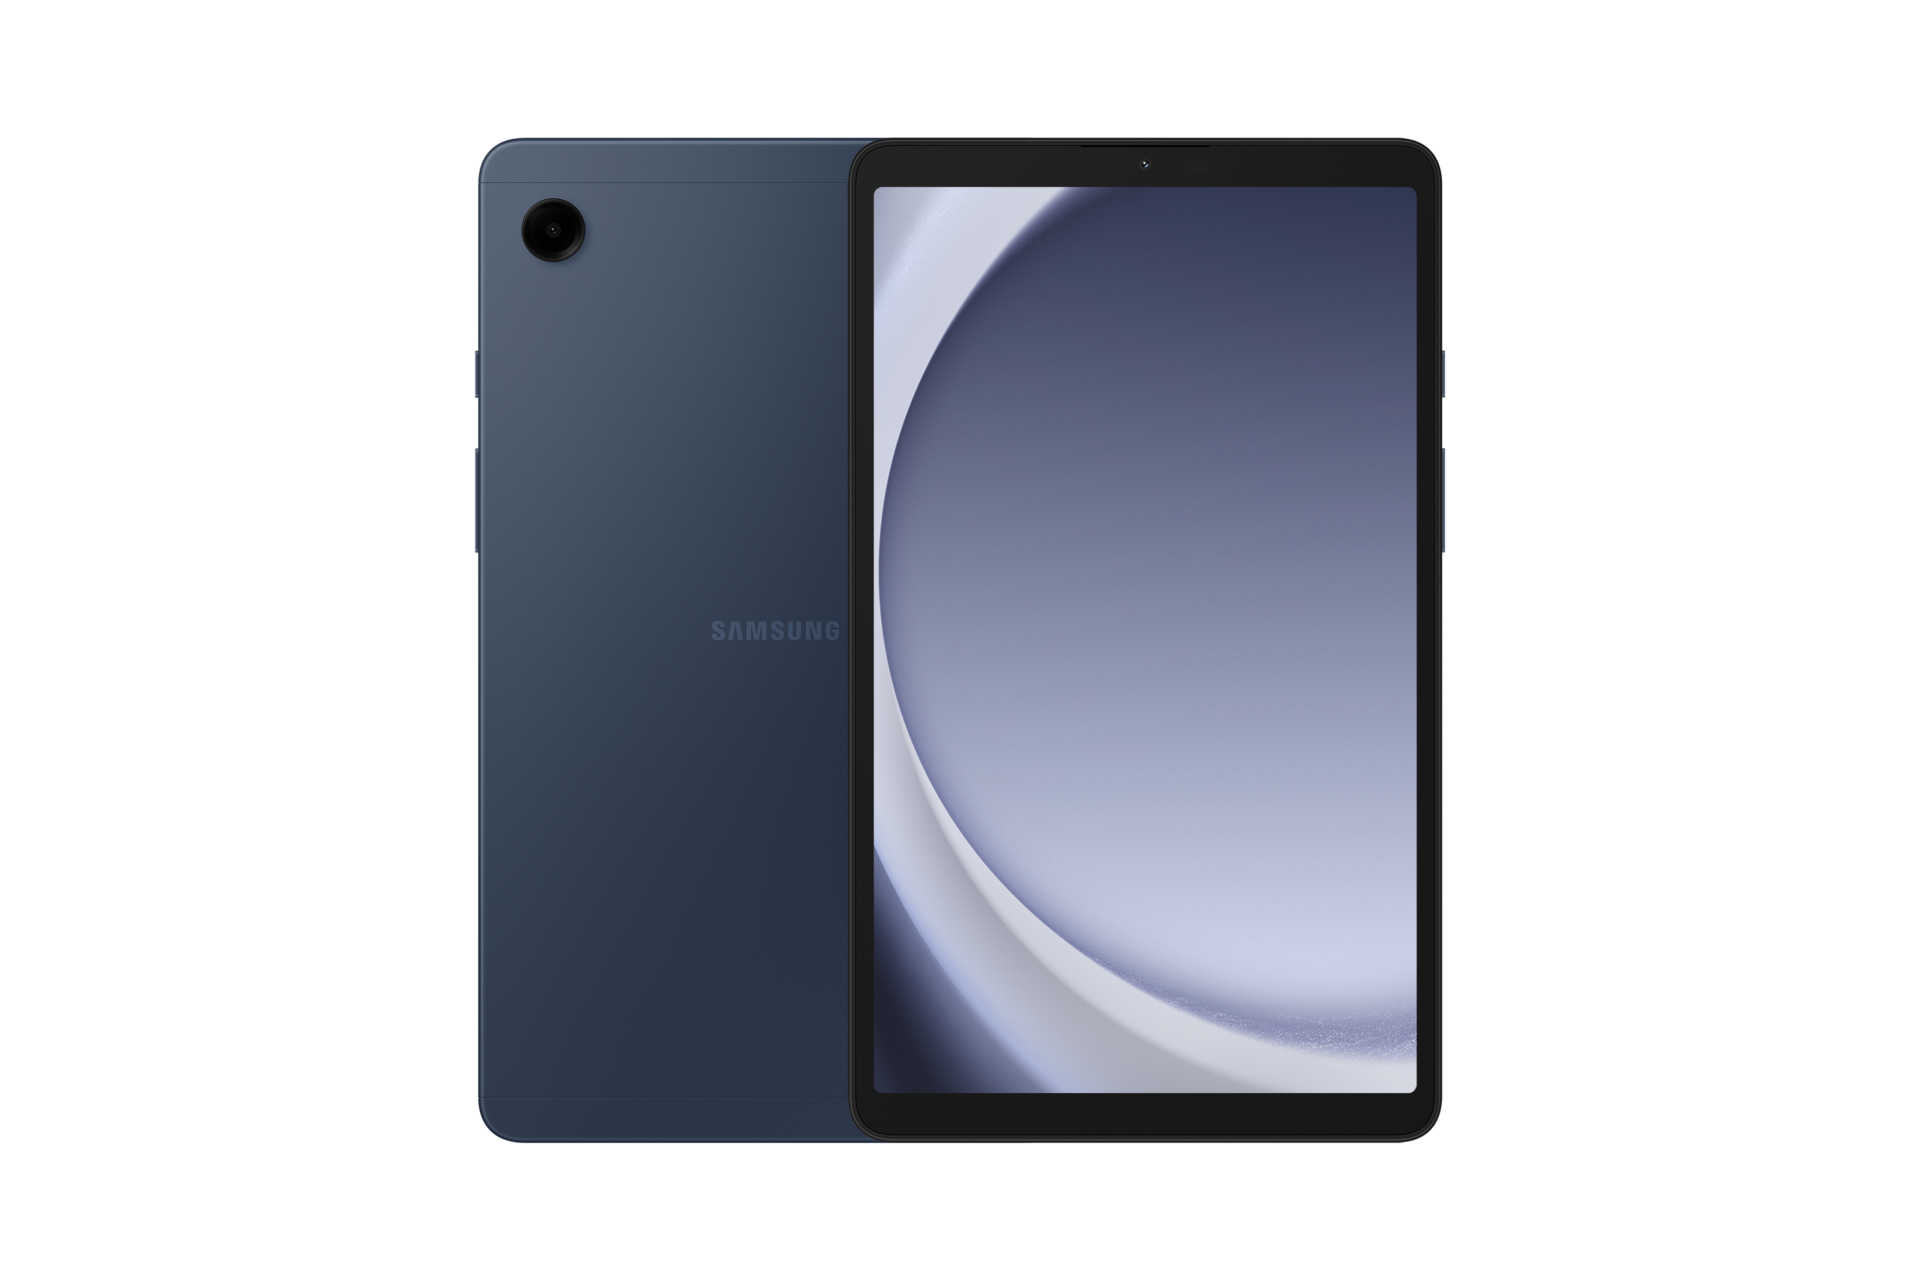 Galaxy Tab A9 (Wi-Fi)